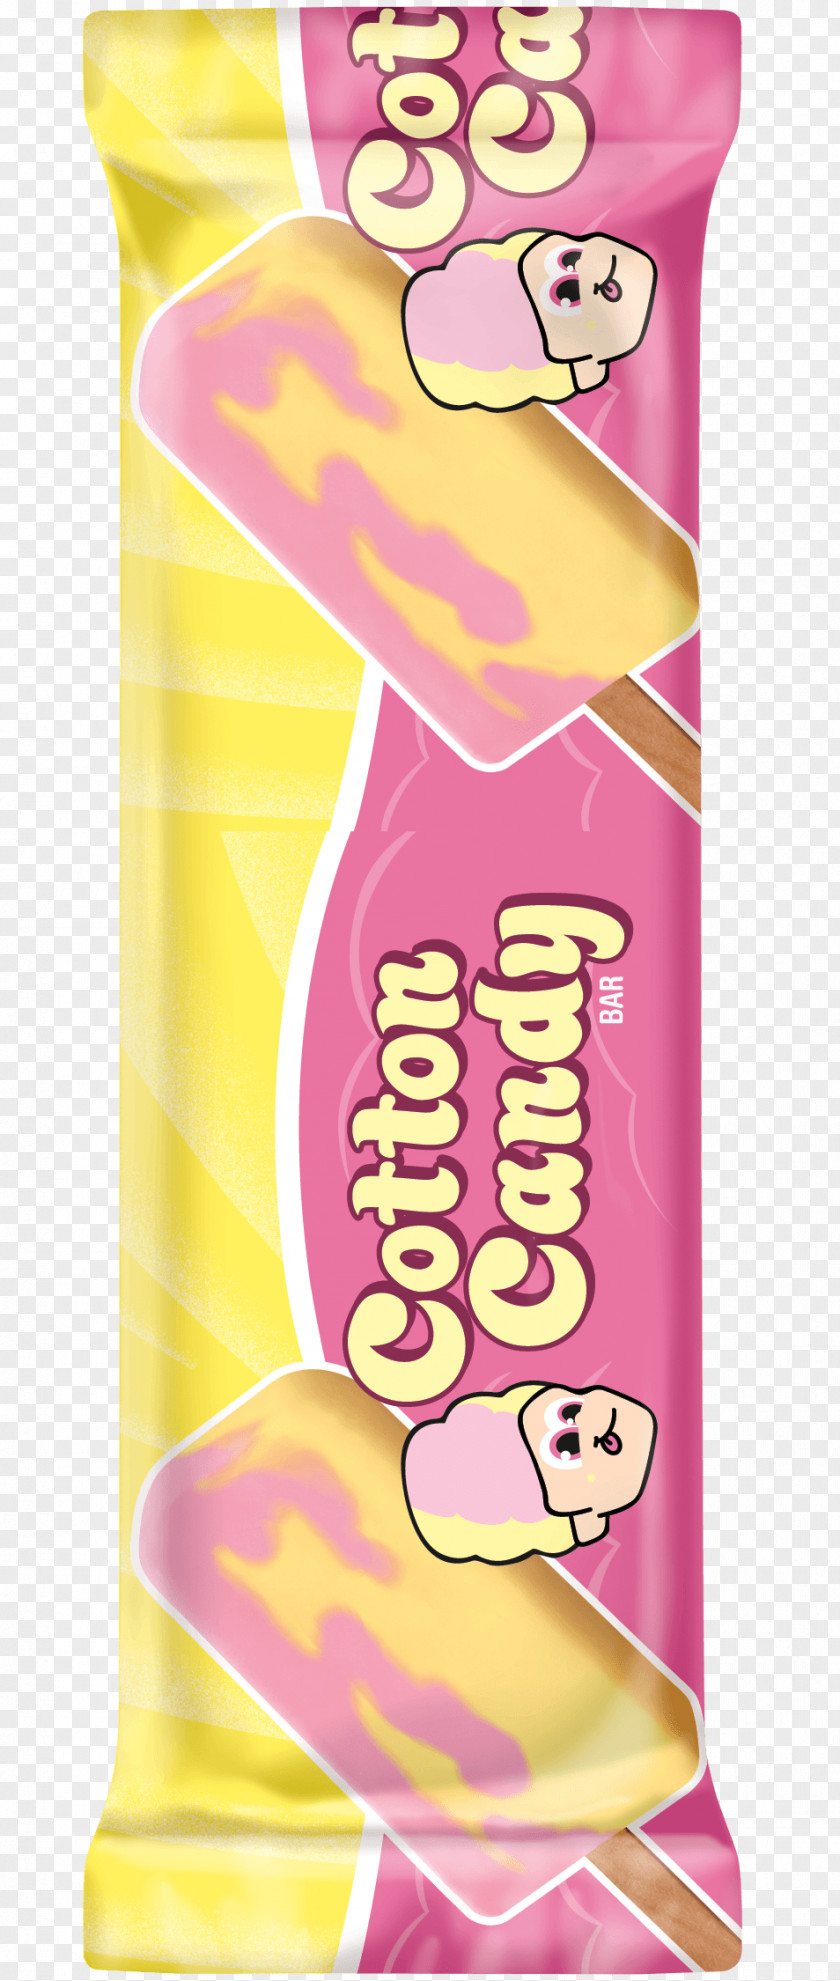 Cotton Candy Junk Food Flavor Cartoon PNG